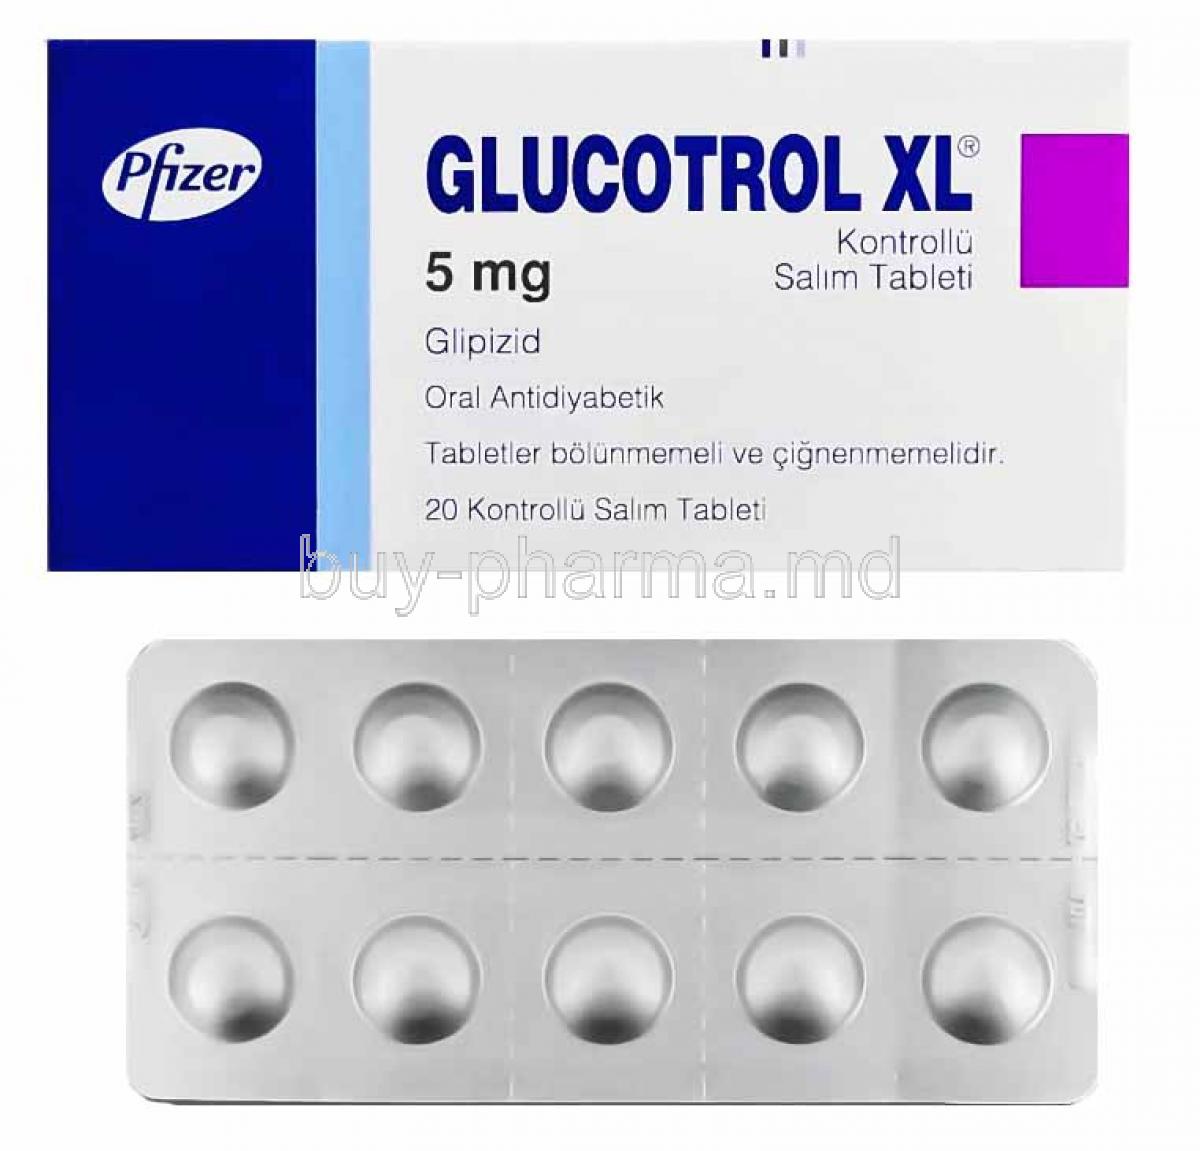 Glucotrol XL, Glipizide box and tablets